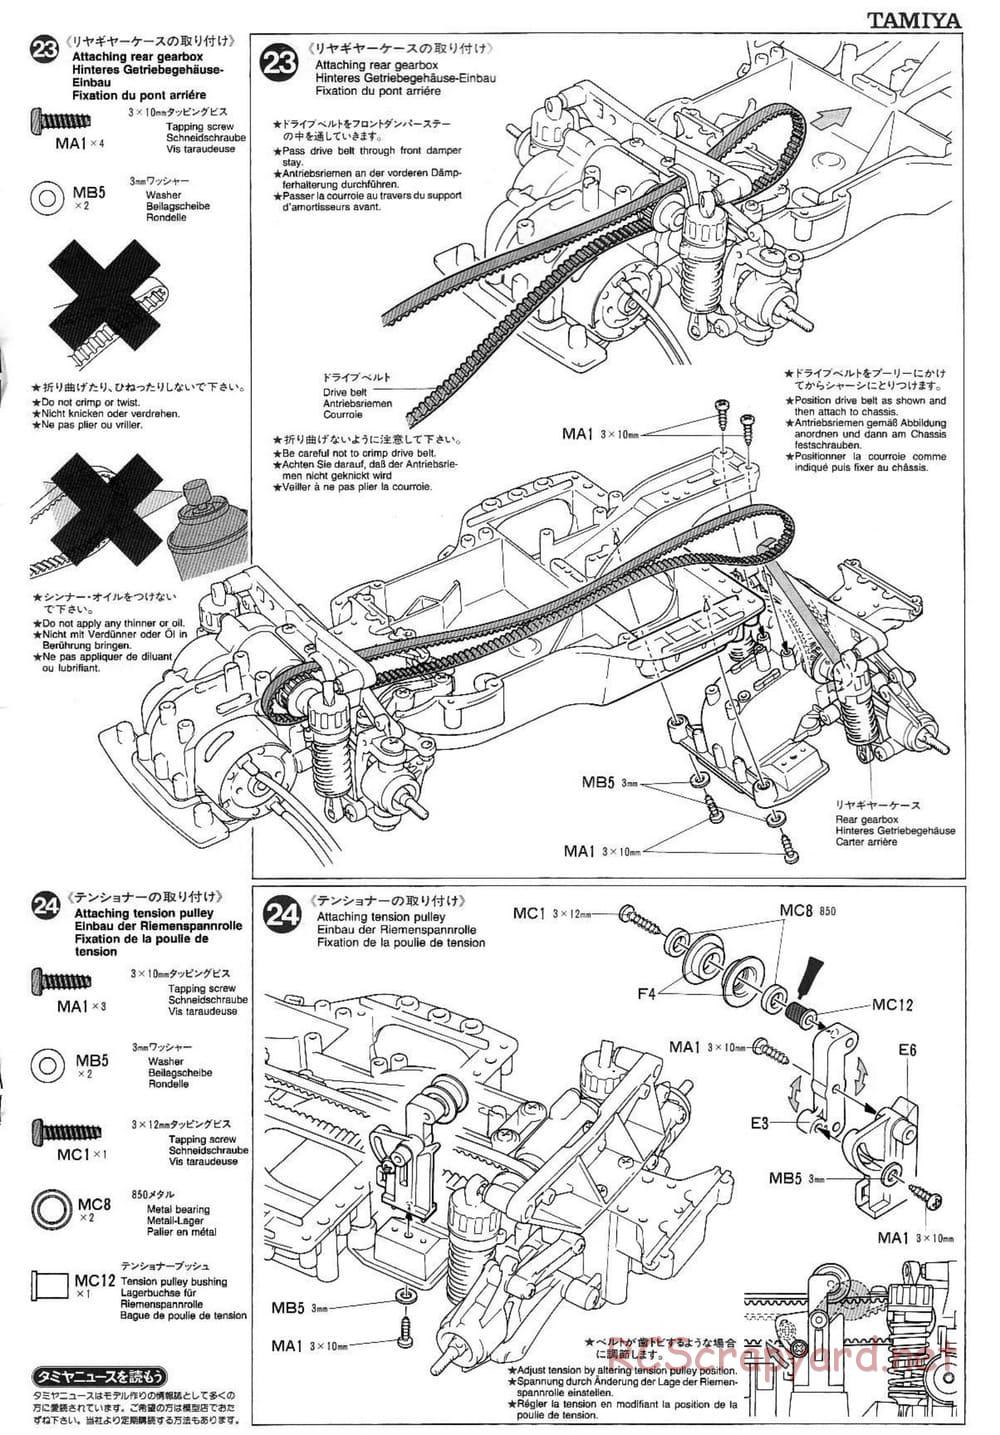 Tamiya - Mitsubishi Lancer Evolution V WRC - TA-03F Chassis - Manual - Page 13